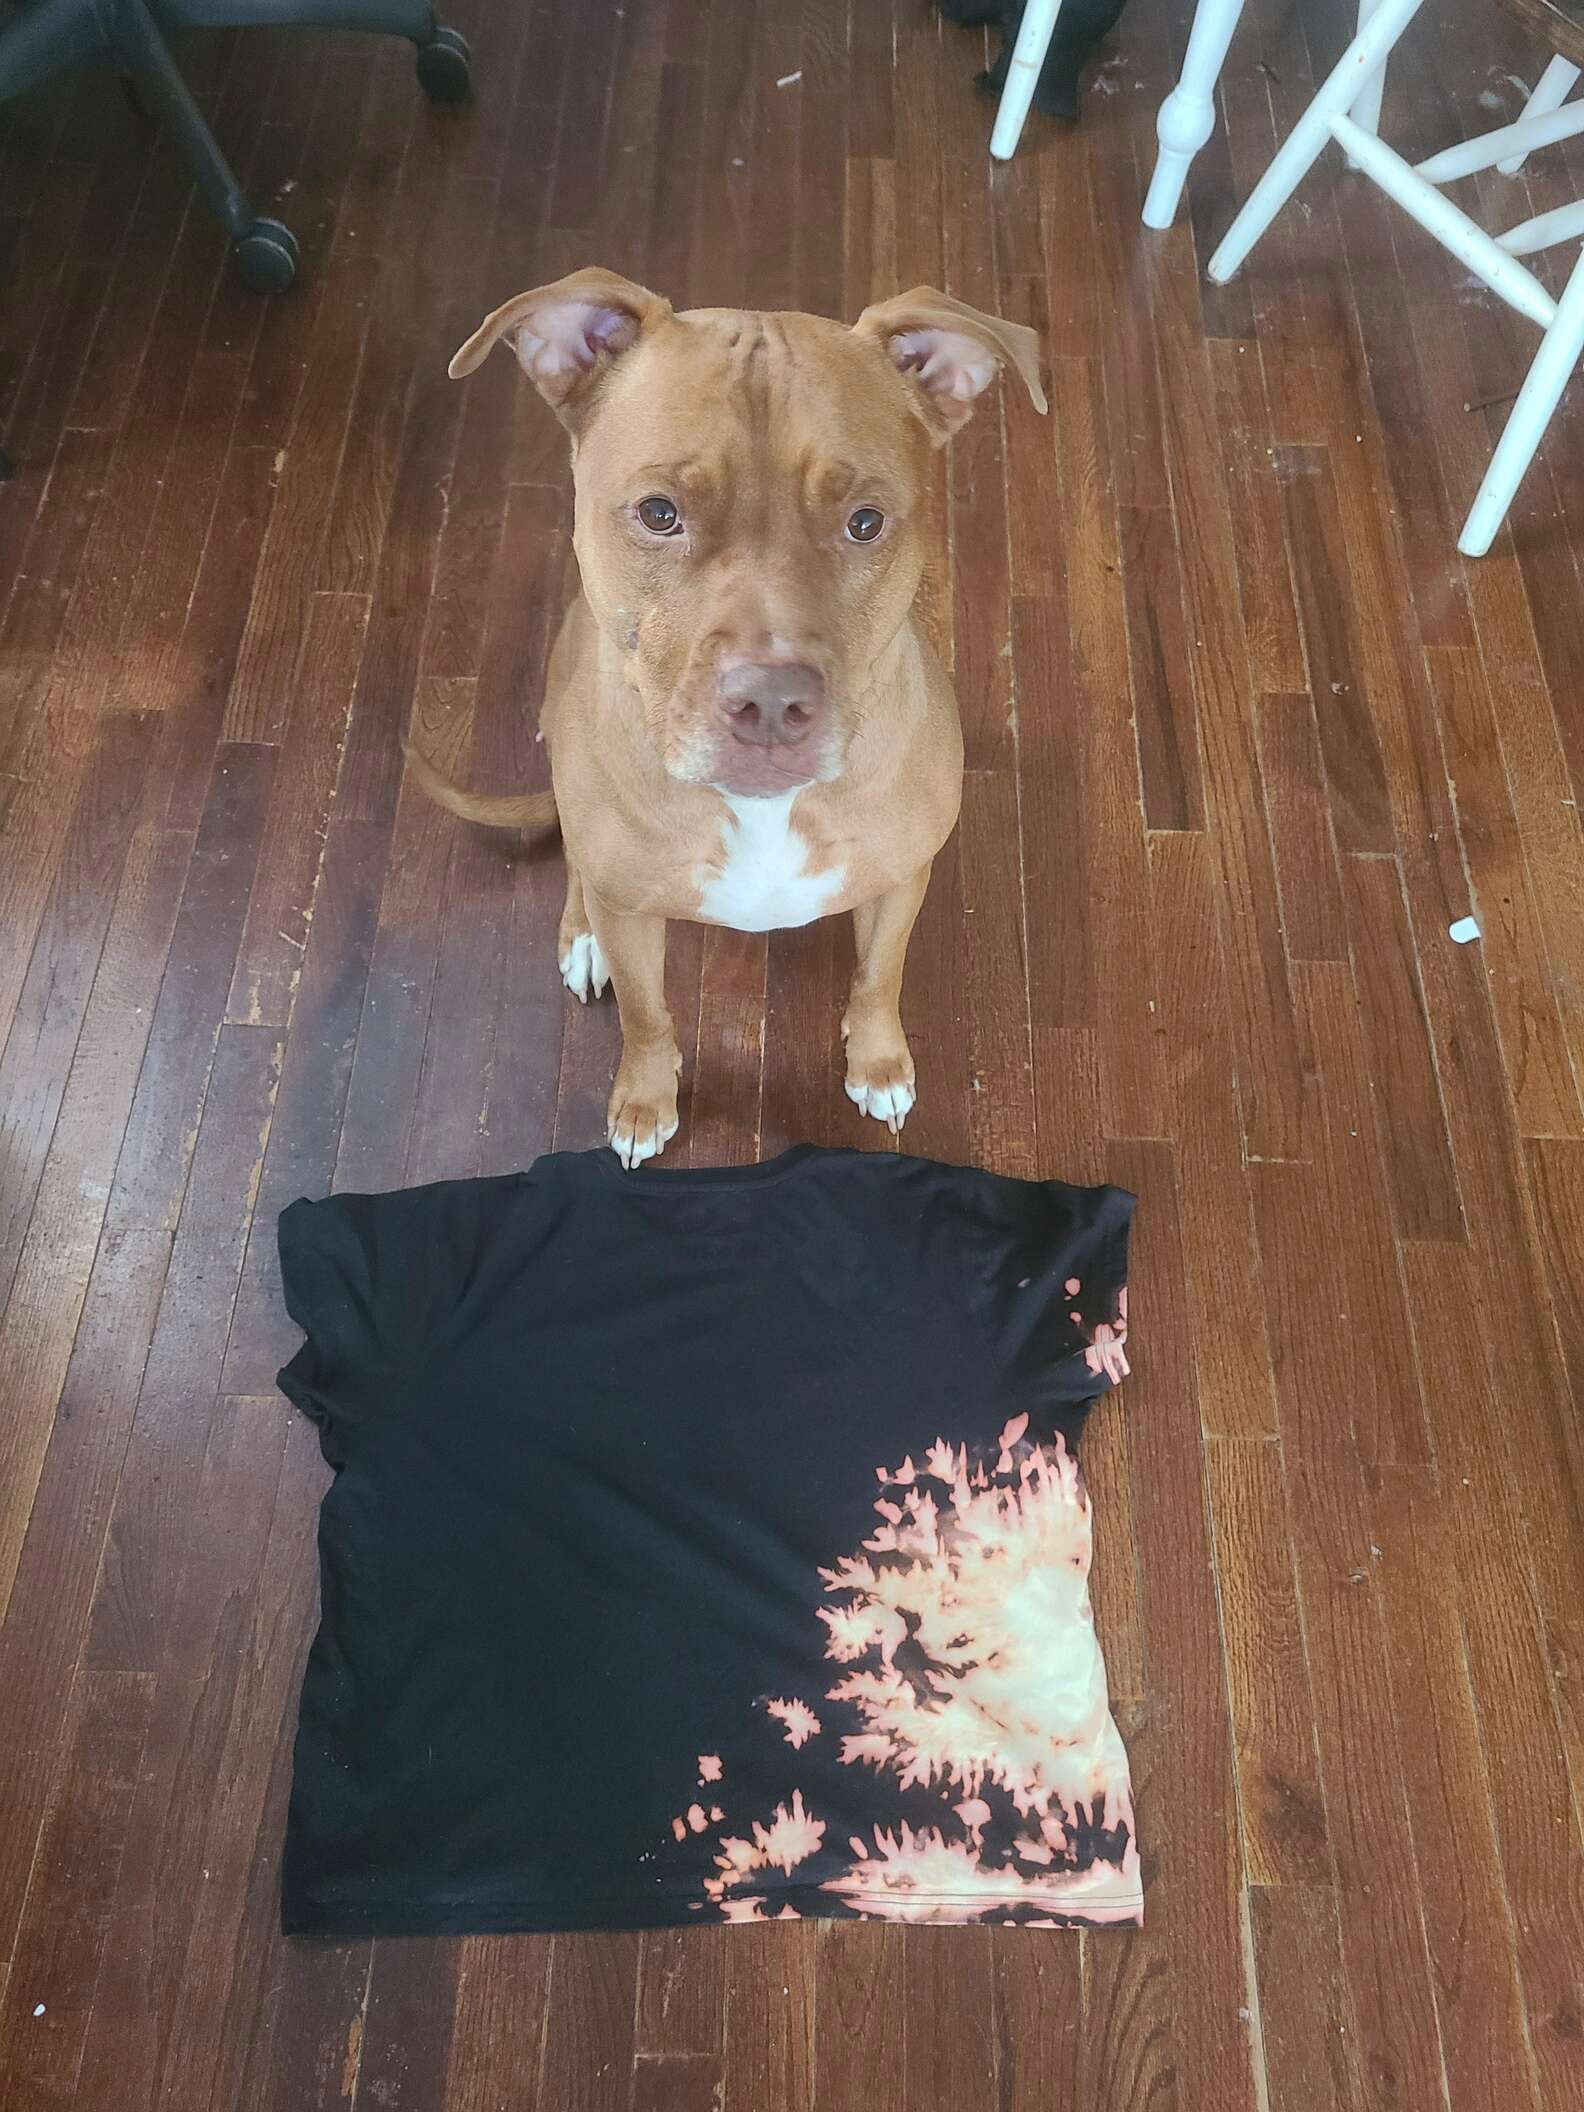 Cachorro cria acidentalmente uma camiseta super legal